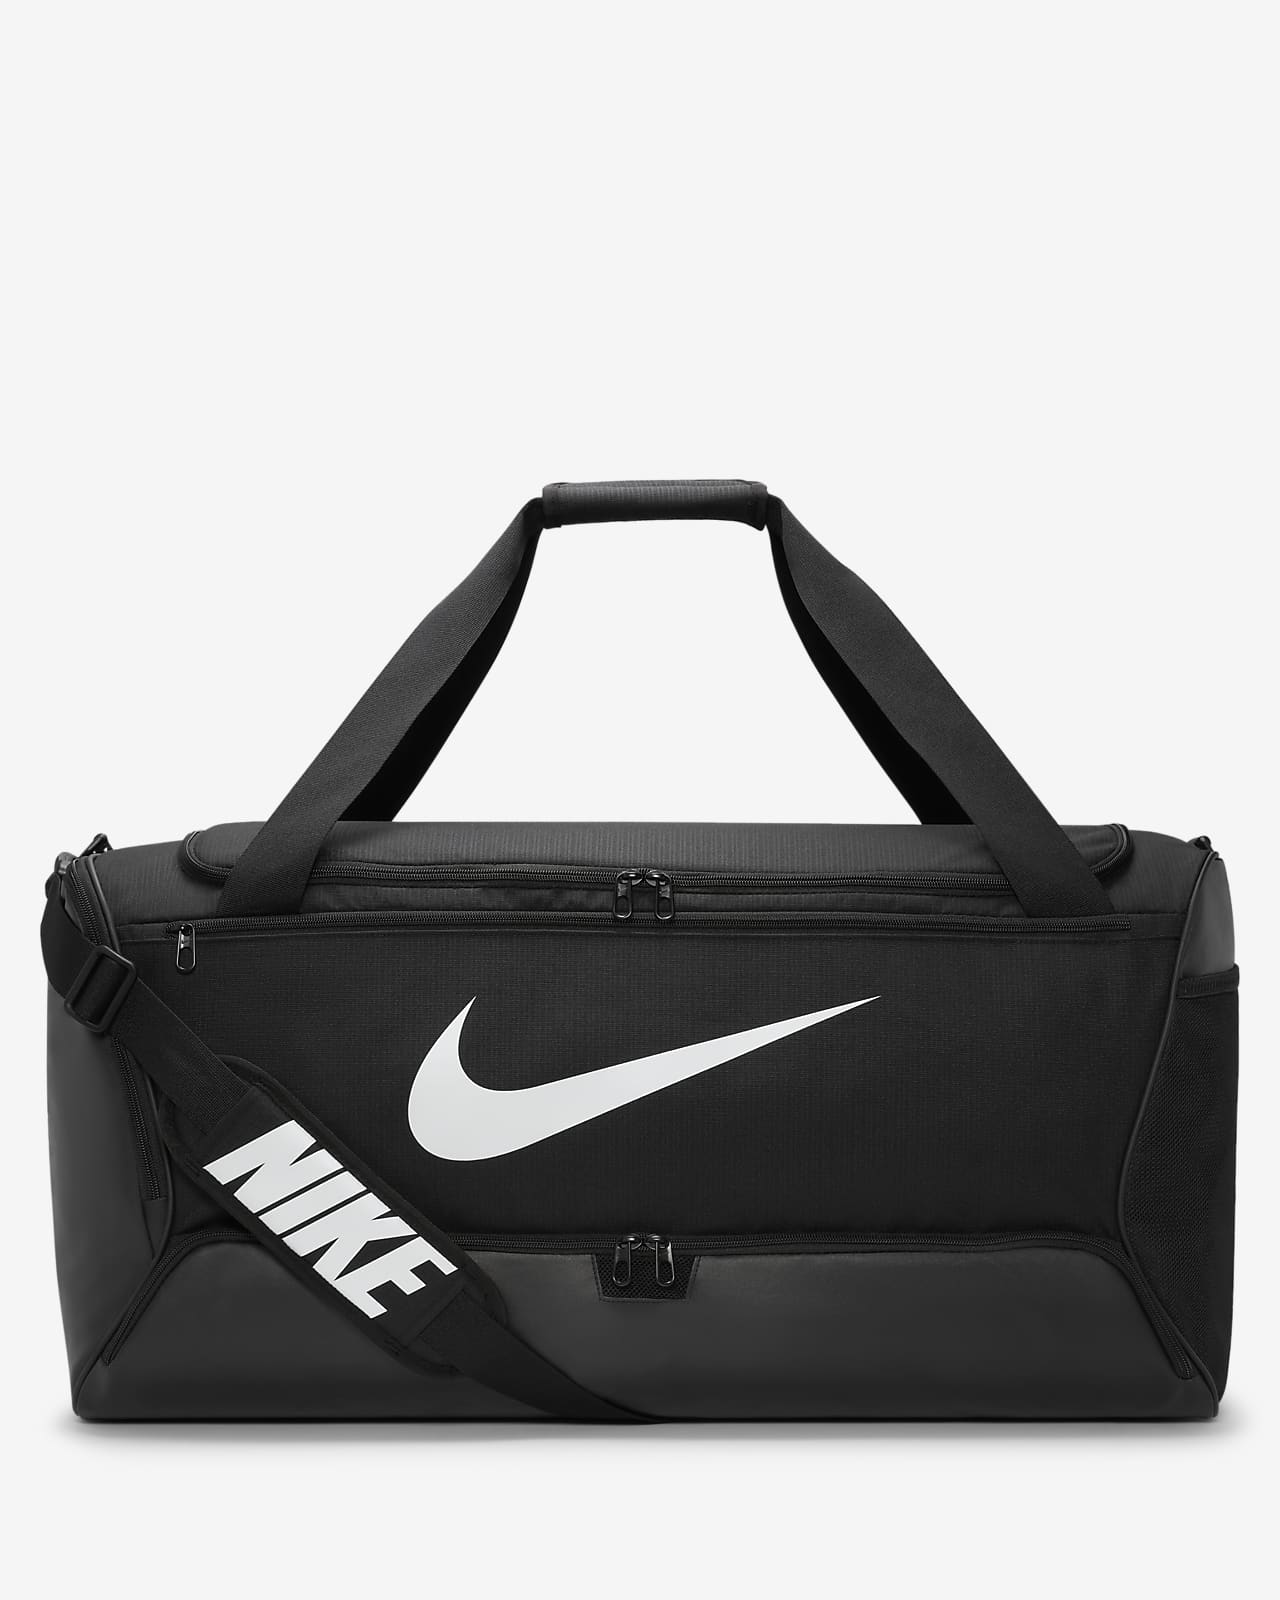 Luggage  Leather duffle bag, Nike bags, Leather duffle